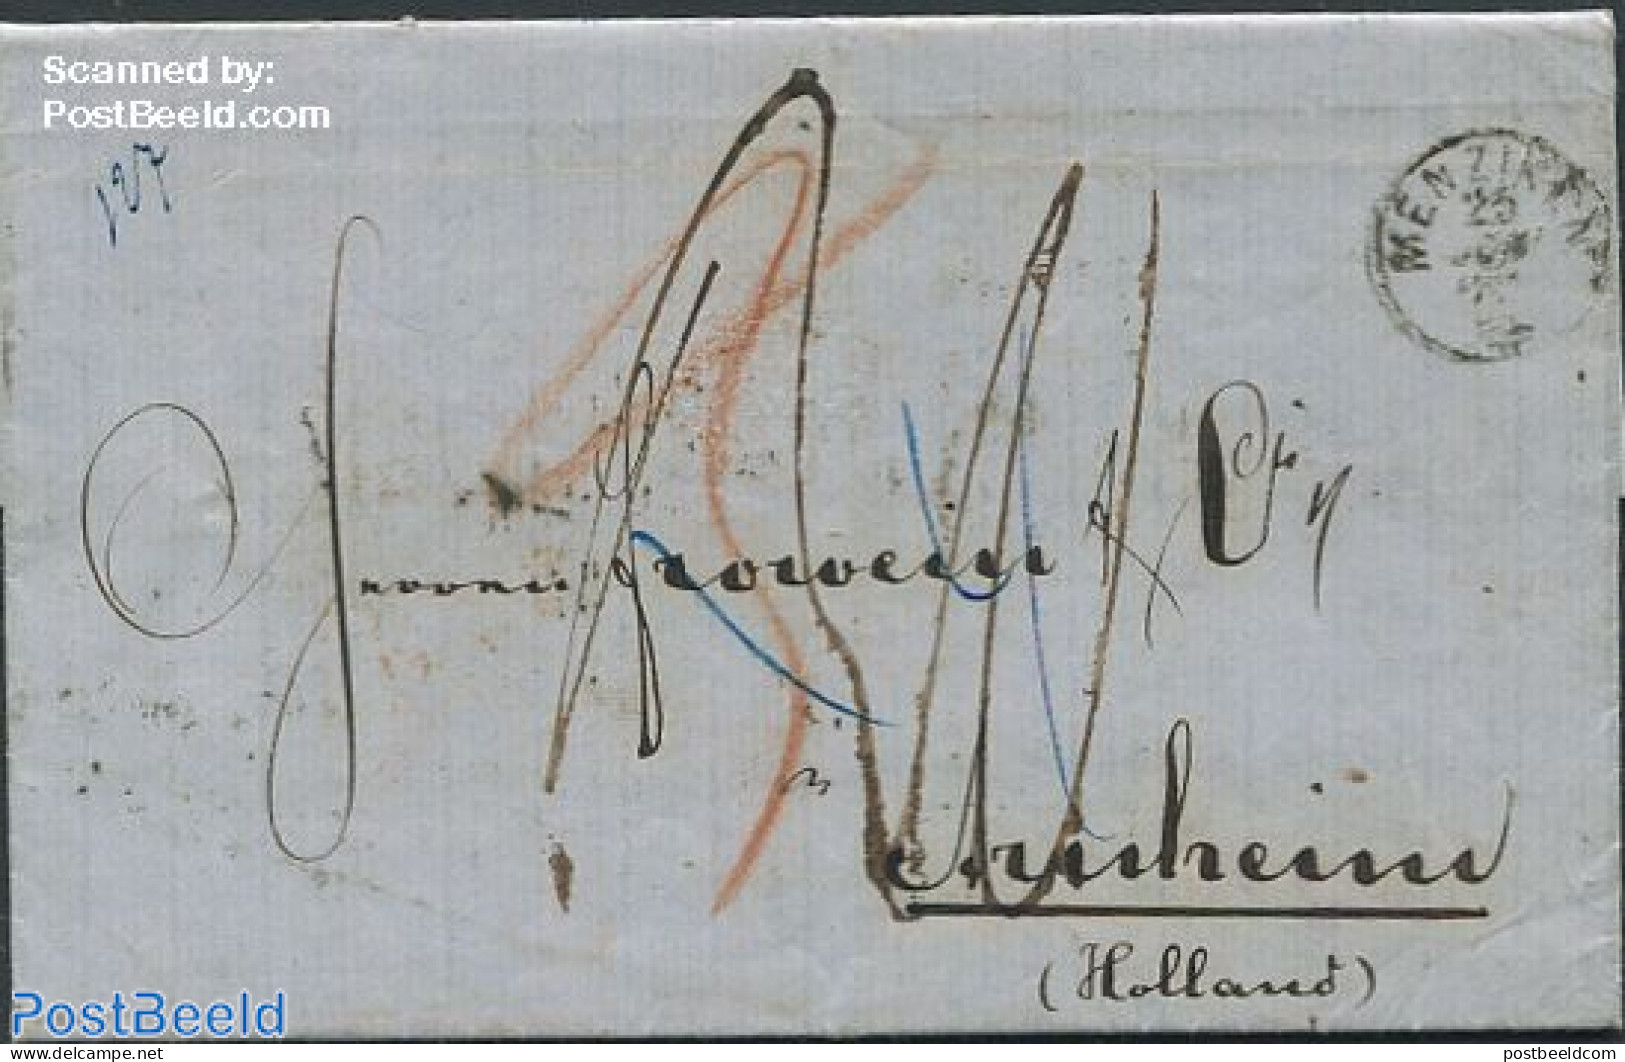 Switzerland 1861 Folding Letter From Zwitserland To The Netherlands, Postal History - Storia Postale